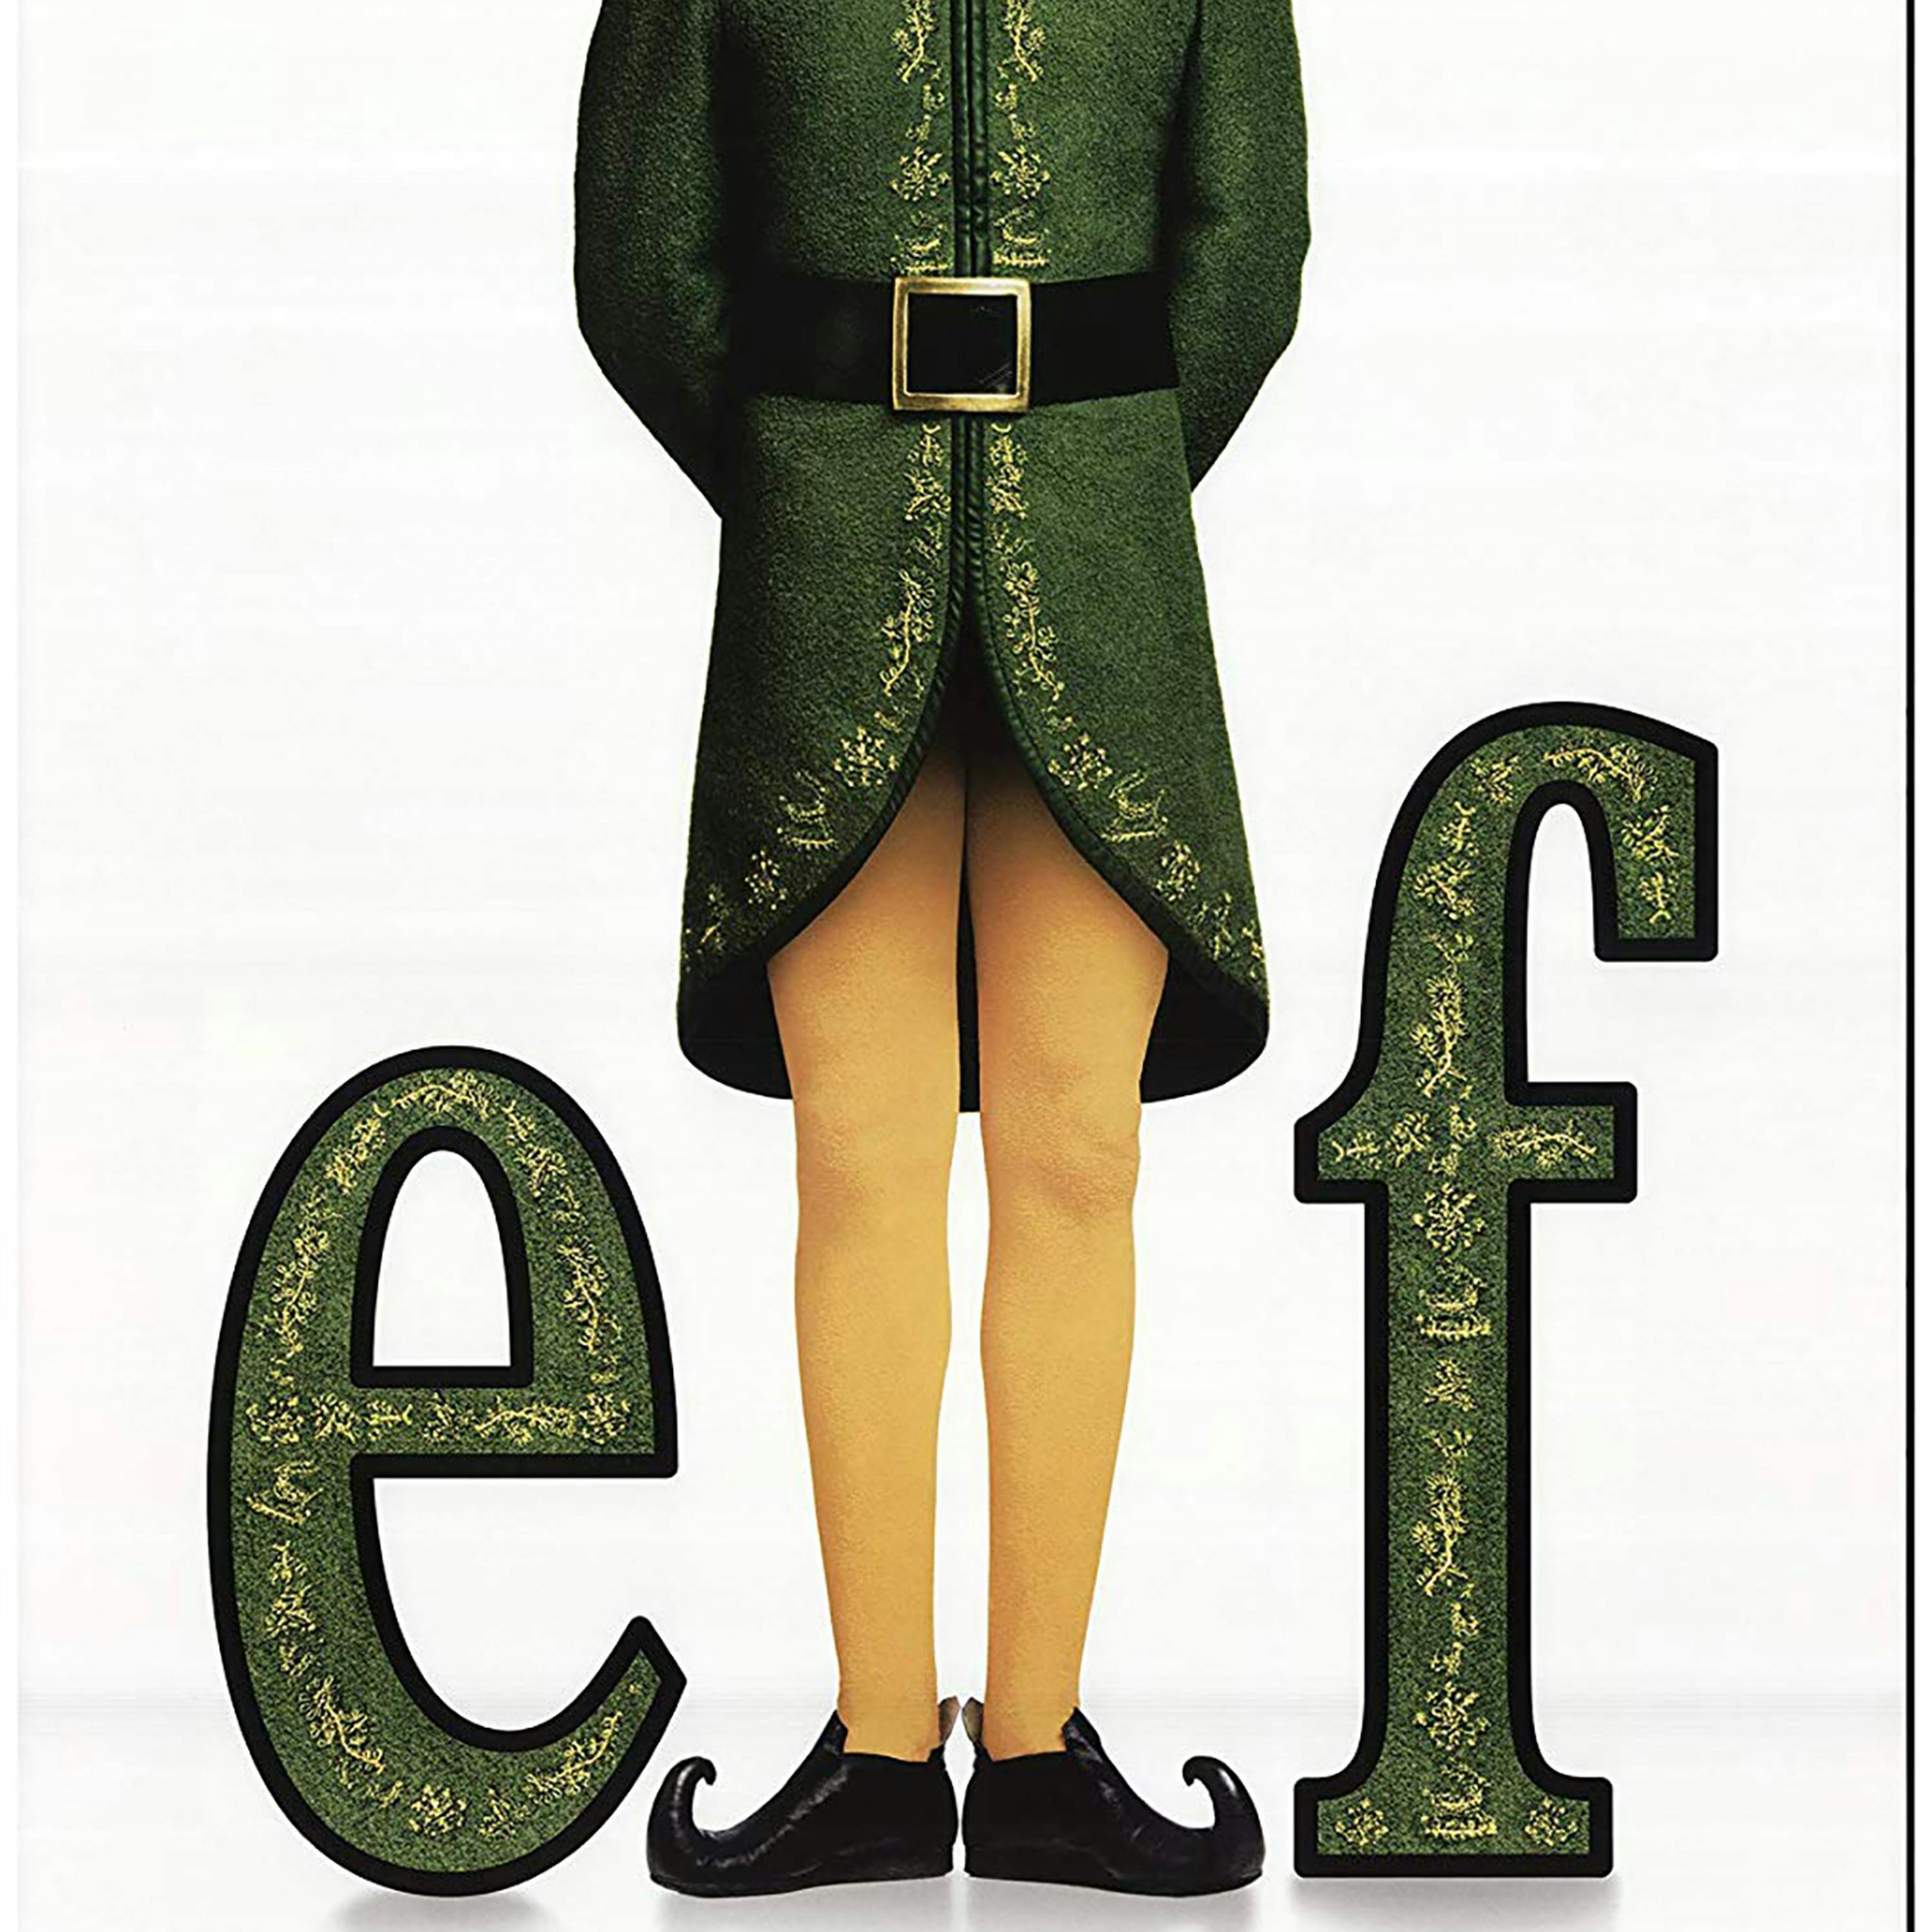 Episode 184 - Elf (2003)